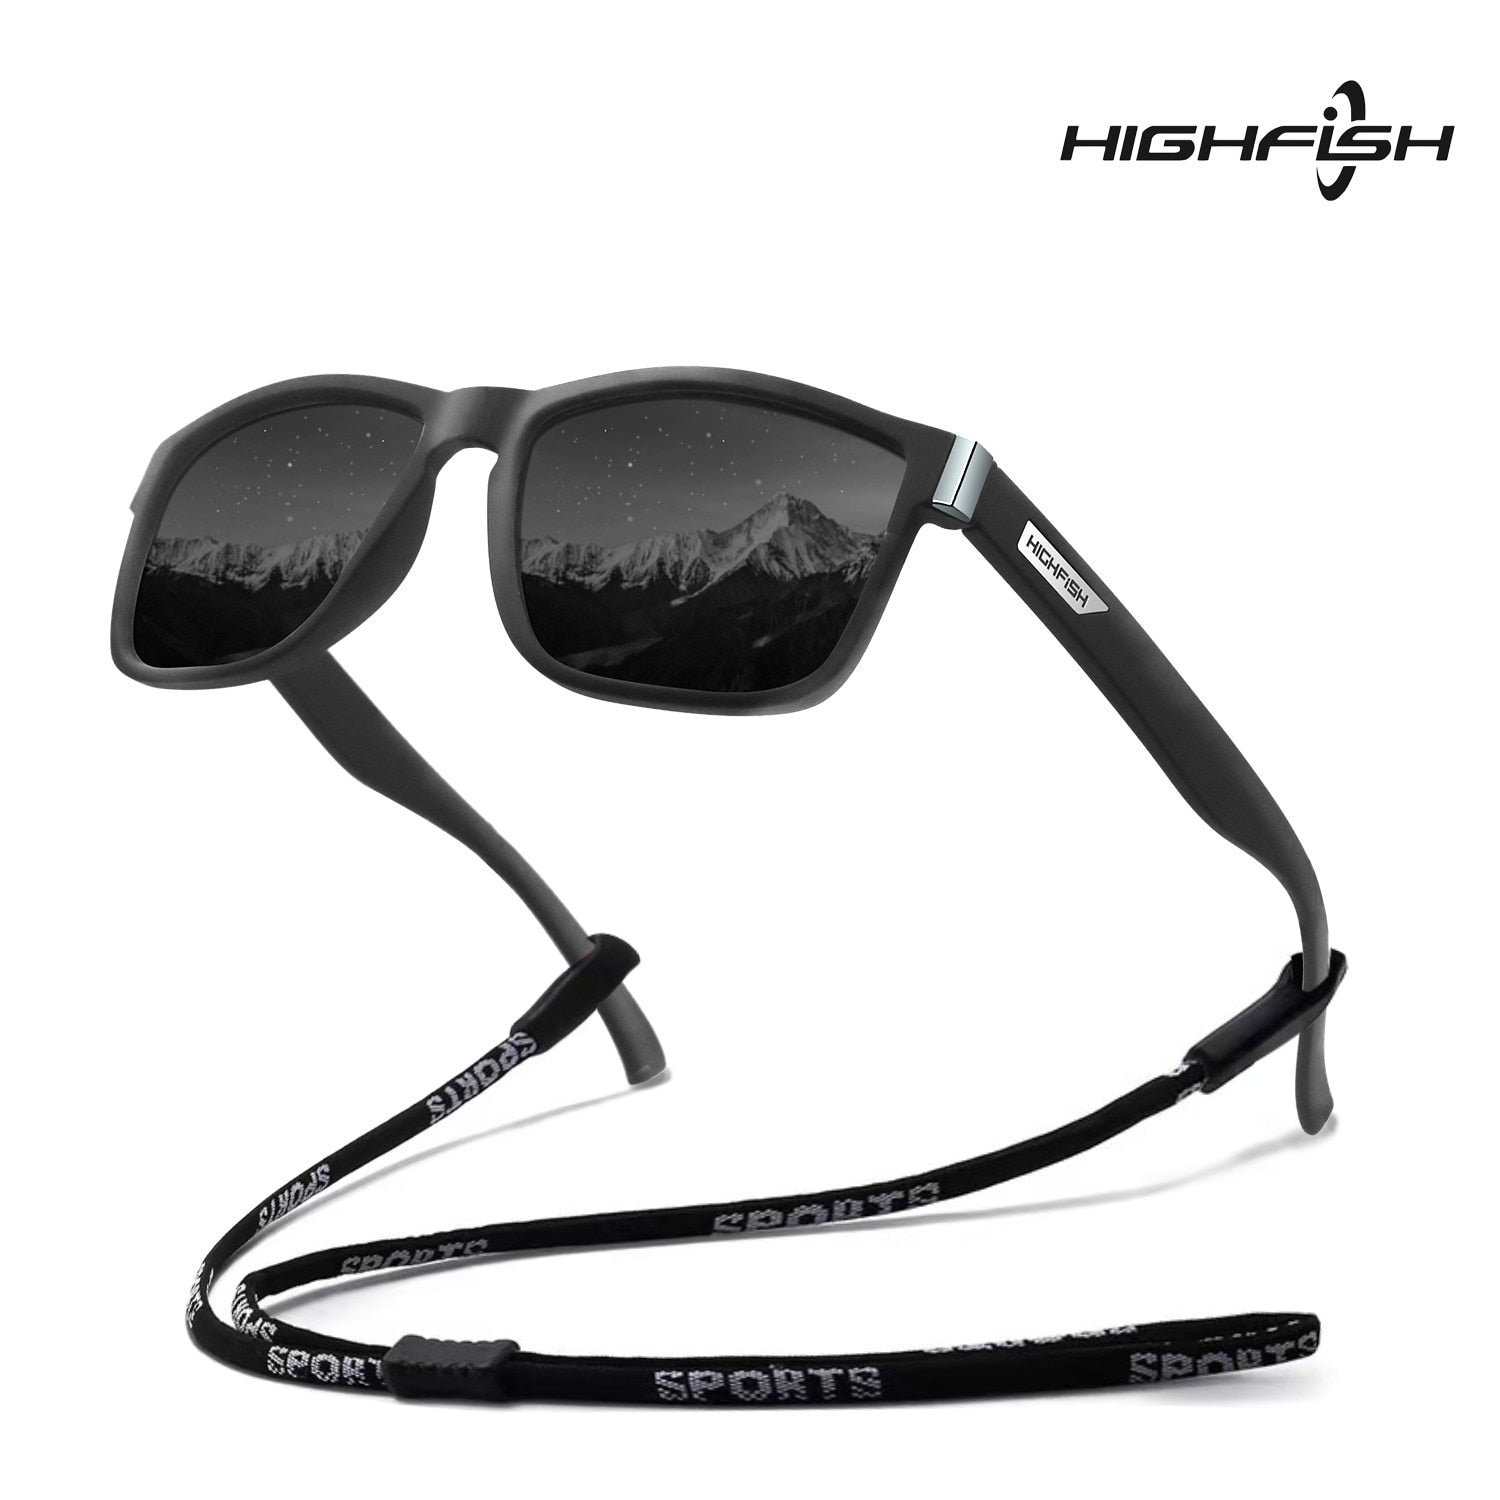 Fishoholic Polarized Fishing Sunglasses w Free Hard Case & Pouch UV400 100%  UV Protection. Best Gift to Fish River Lake Bass Saltwater & Flyfishing (R)  Trademark (Gloss Black, Blue Mirror) : Amazon.in: